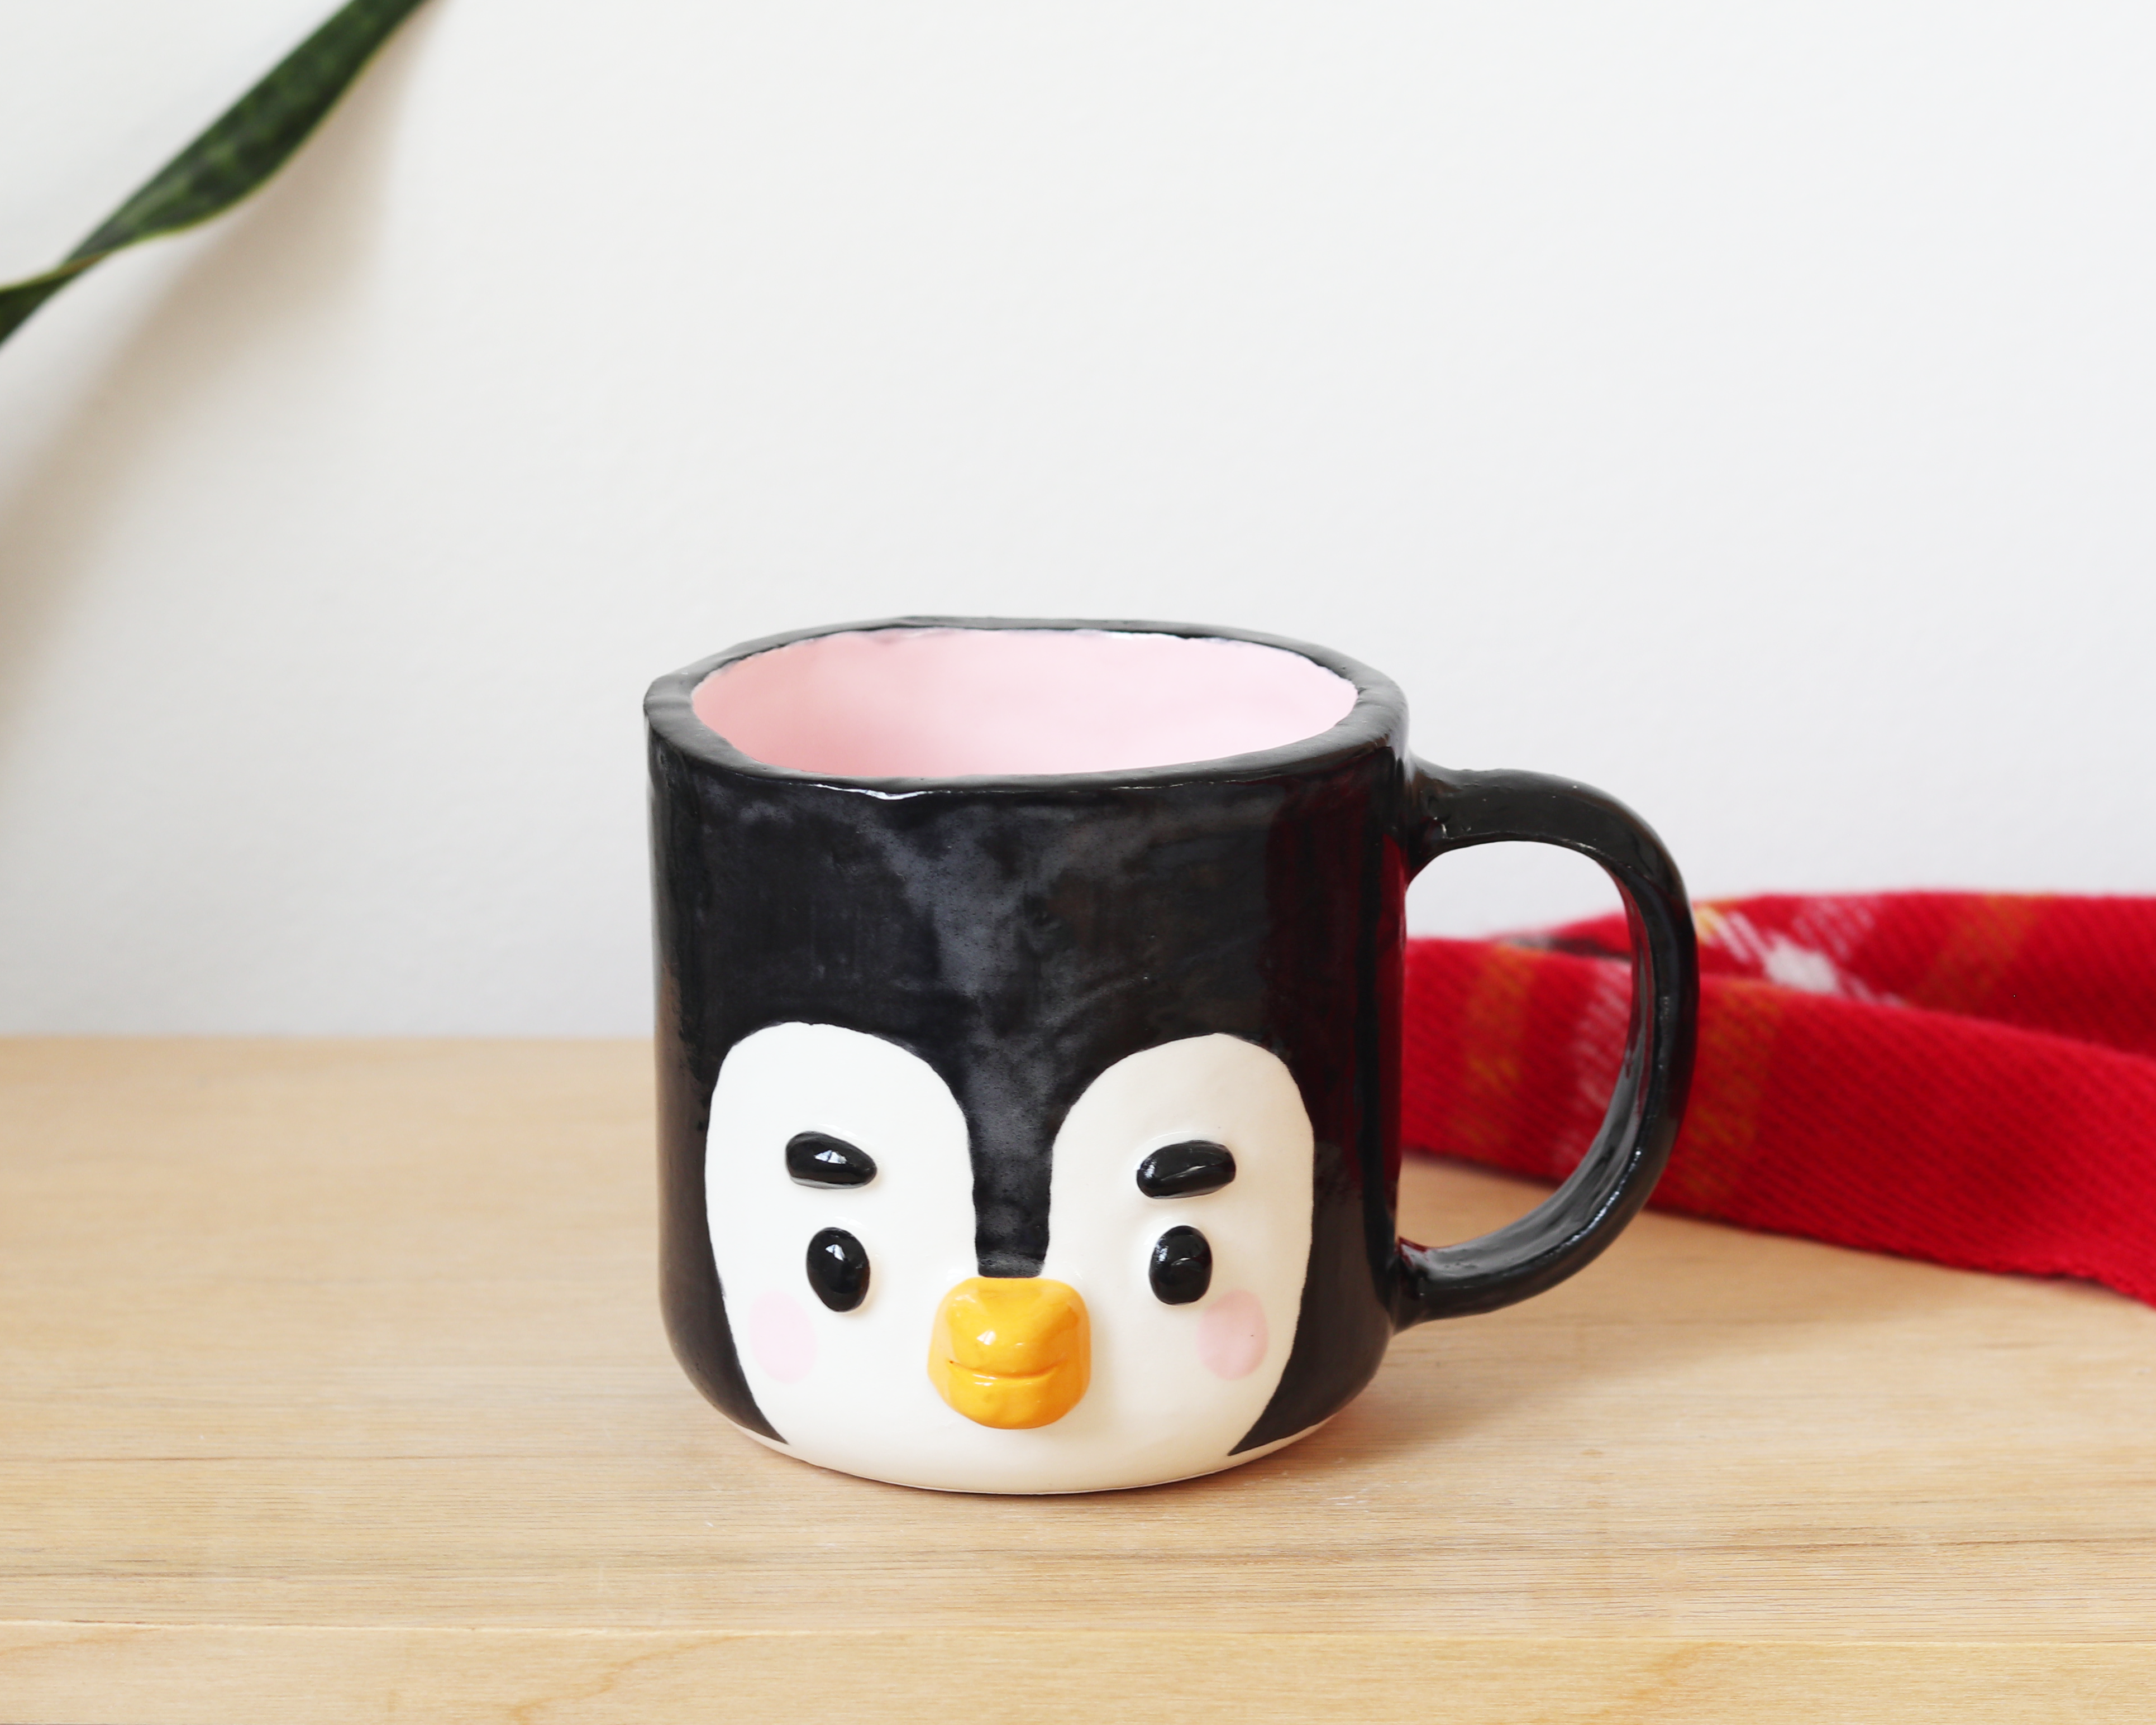 Penguin Coffee Mug: Charming Ramen Shop Haiku - Smiling Penguin